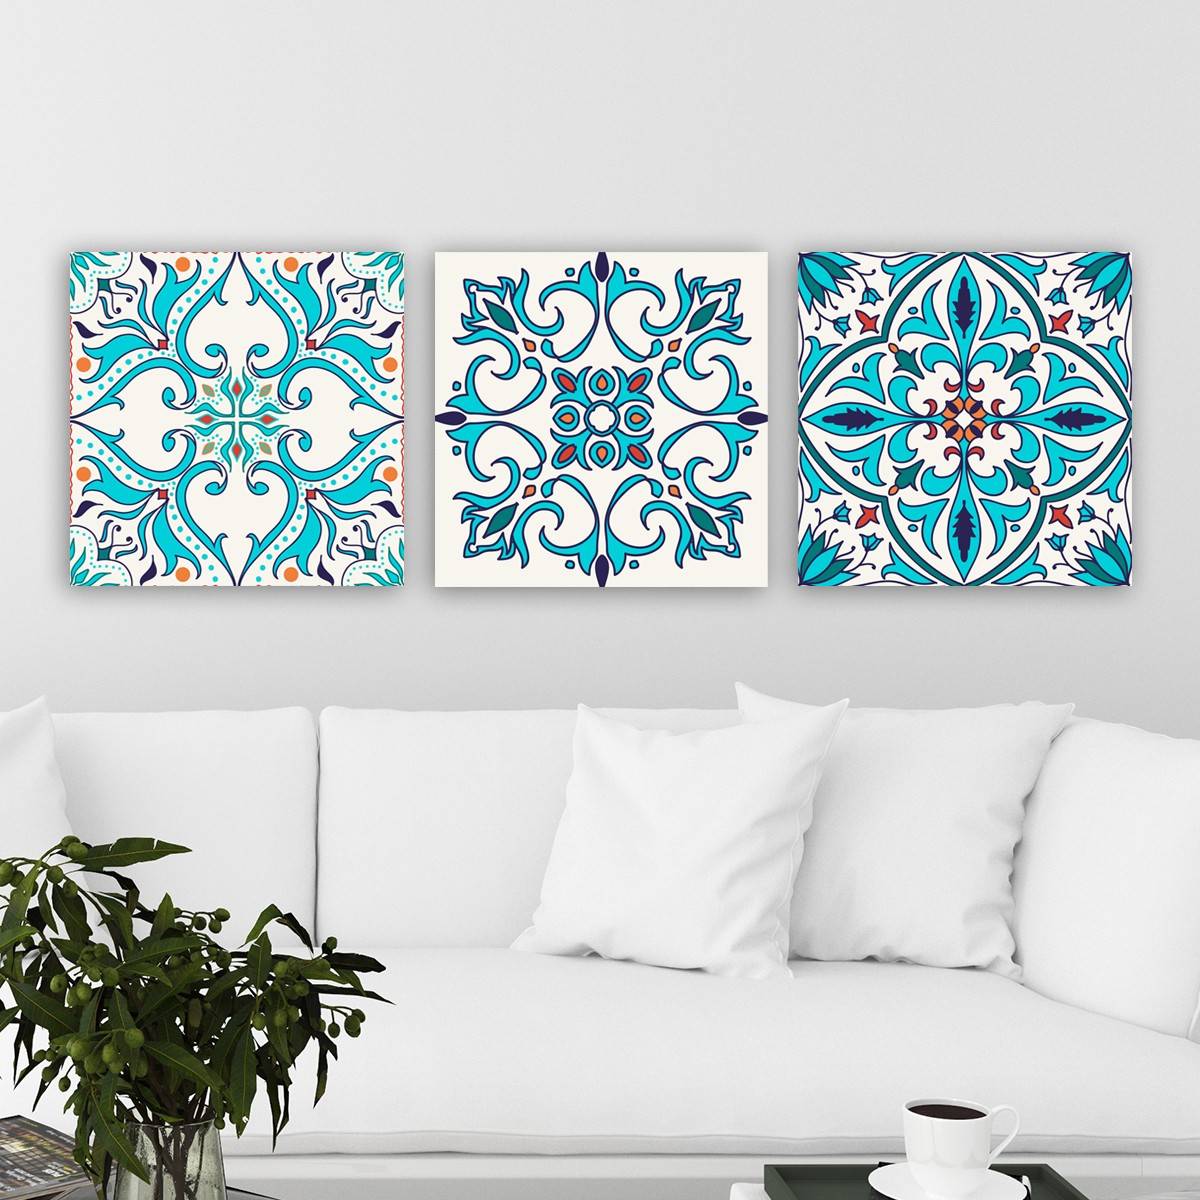 Conjunto de 3 cuadros decorativos con motivos arabescos quatrefoil Scaenicos Lienzo Madera Blanco Azul Turquesa